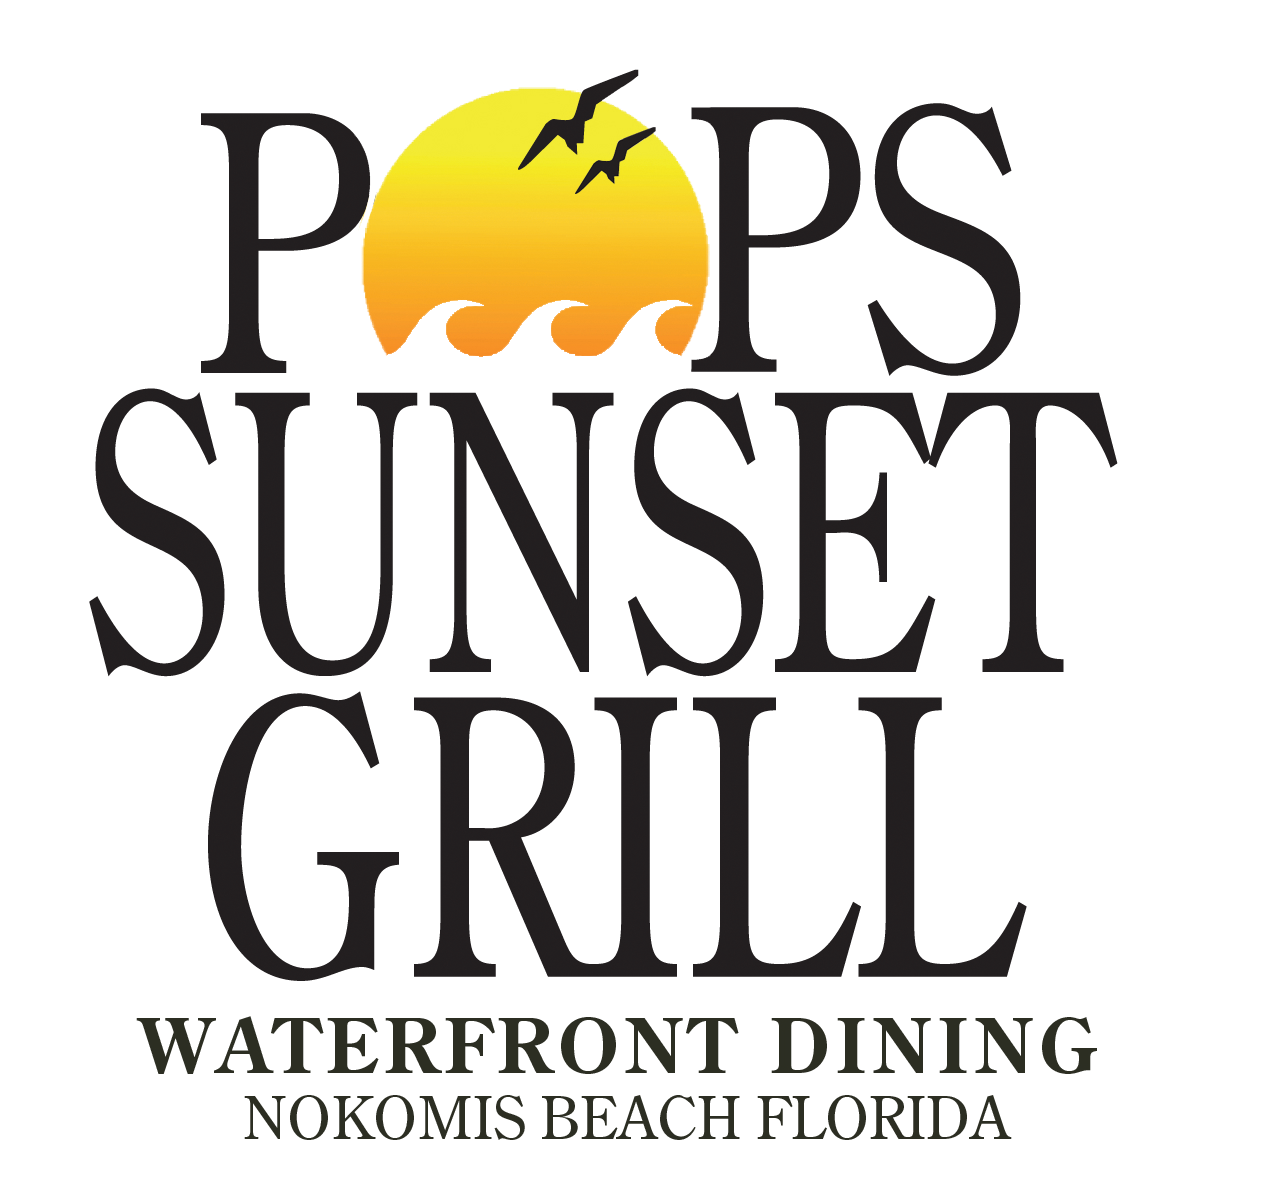 Pop's Sunset Grill